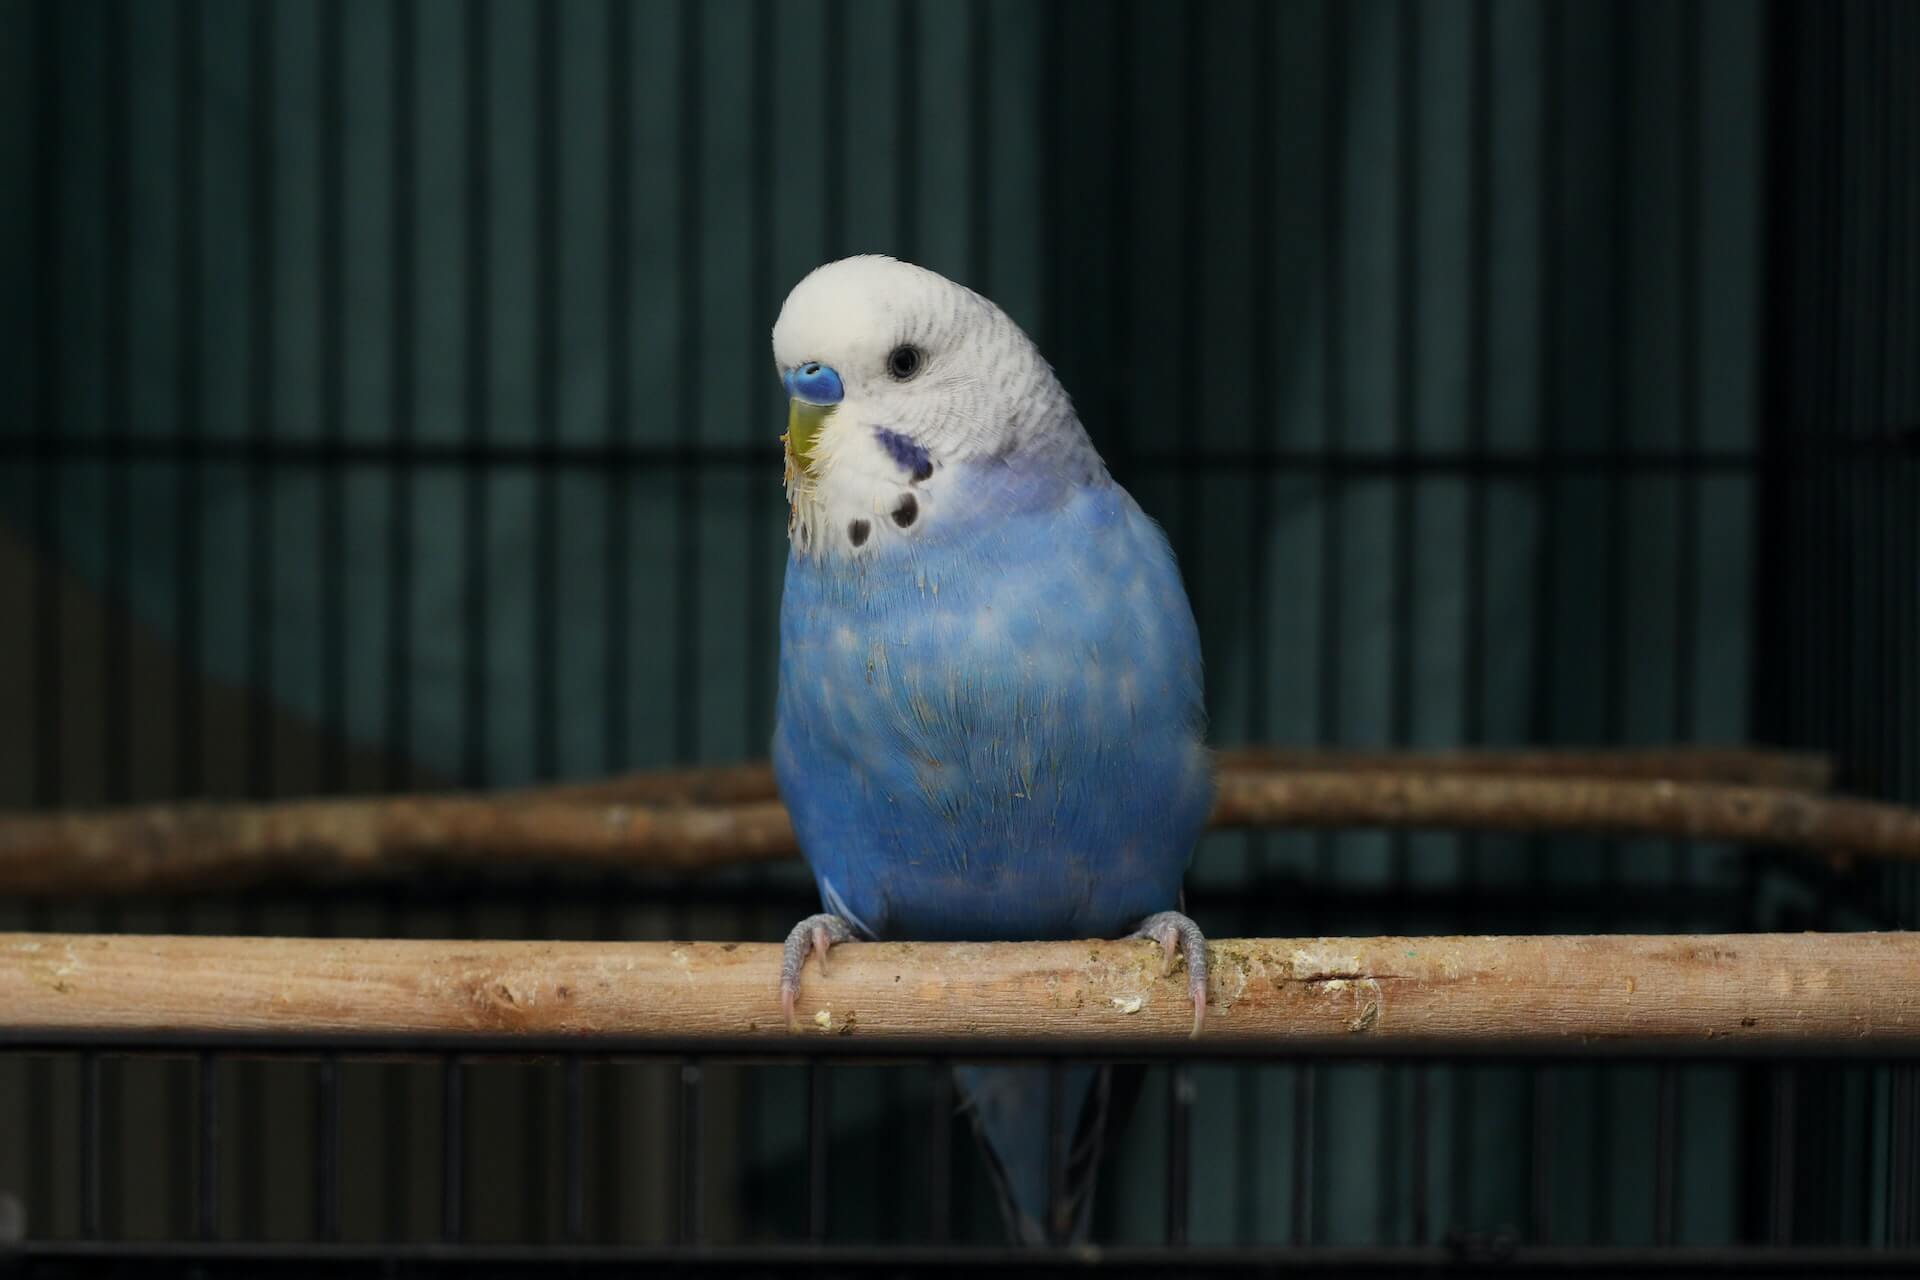 Blue Parakeet Budgie Bird in cage